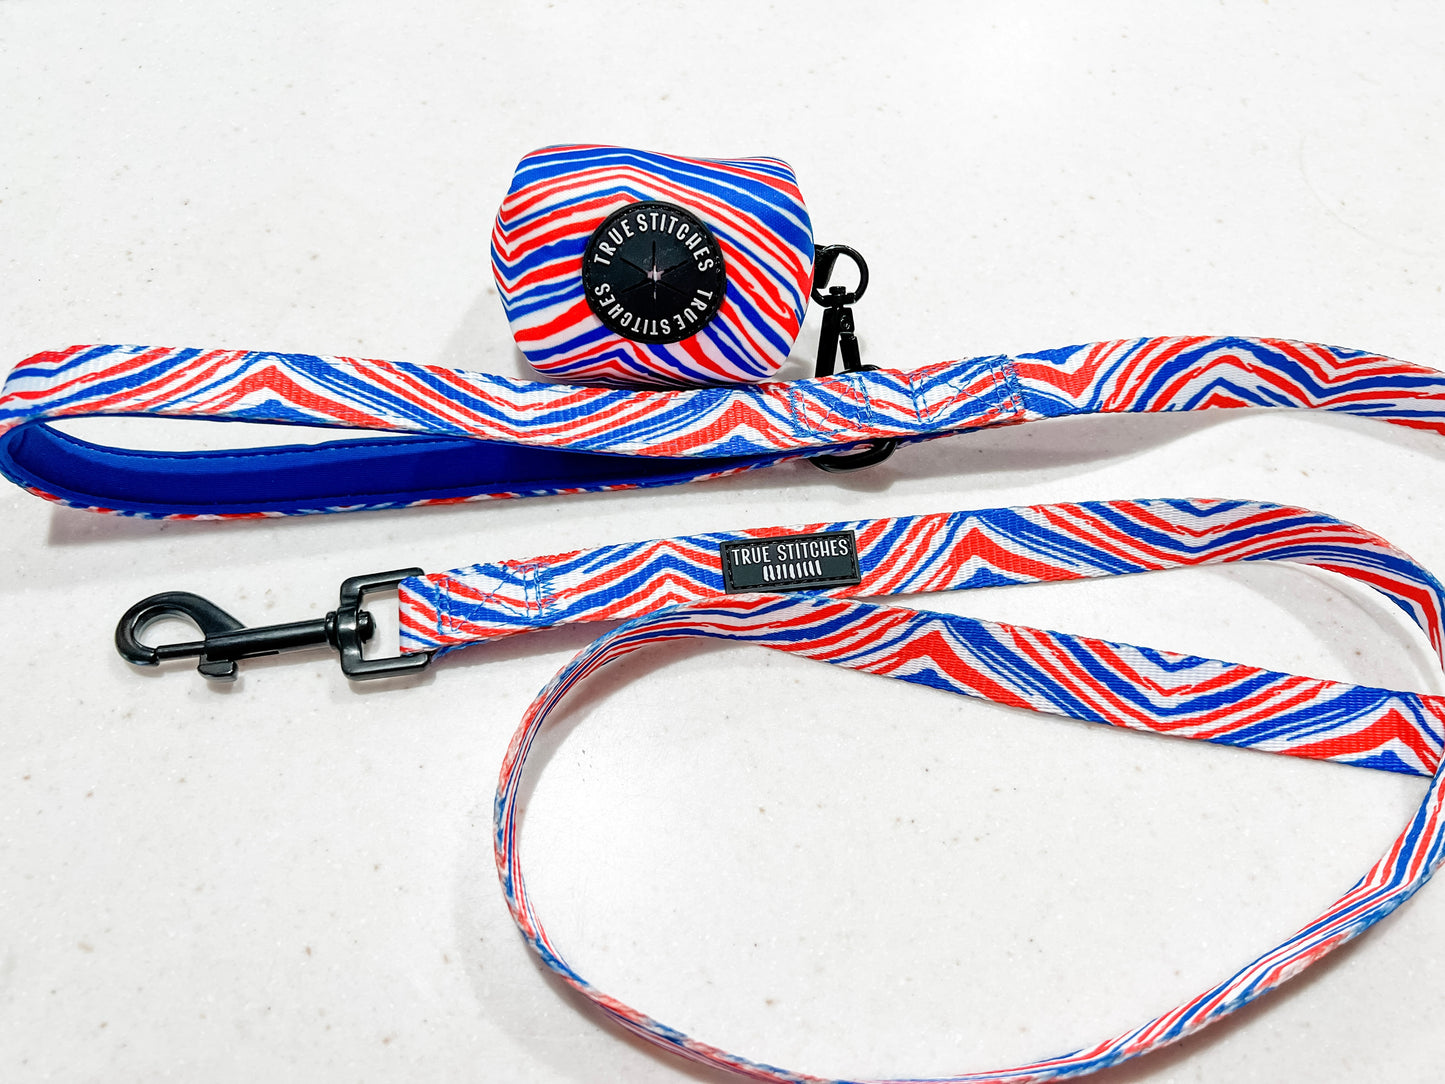 Buffalo Zubaz inspired pet leash